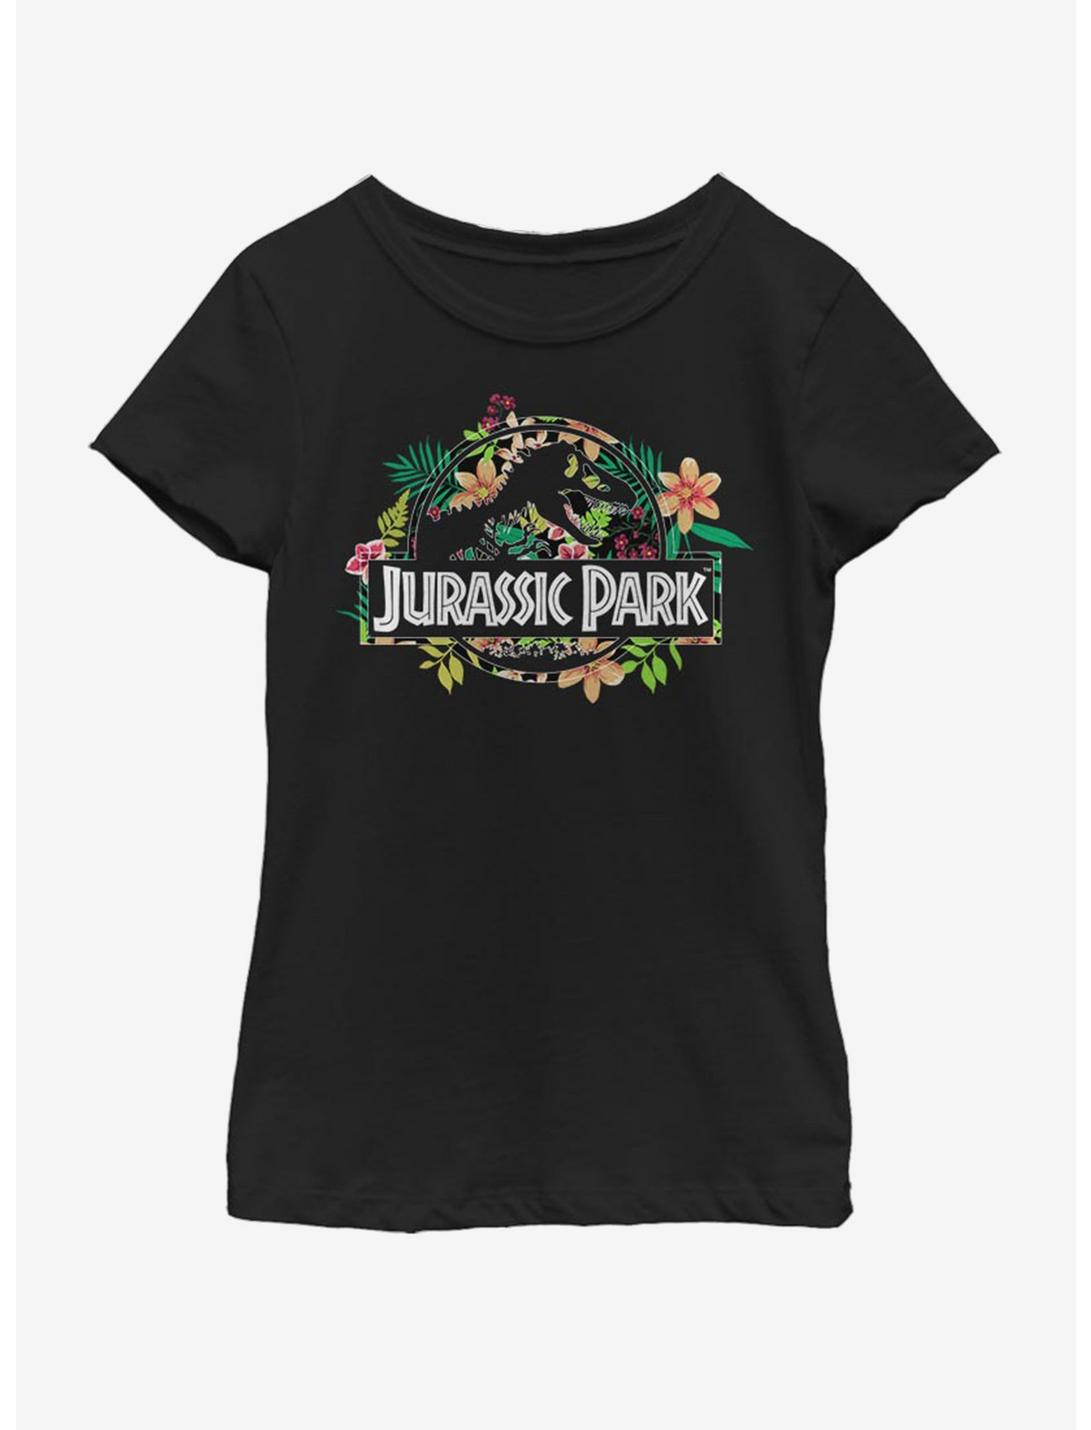 Jurassic Park The Beginning Youth Girls T-Shirt, BLACK, hi-res